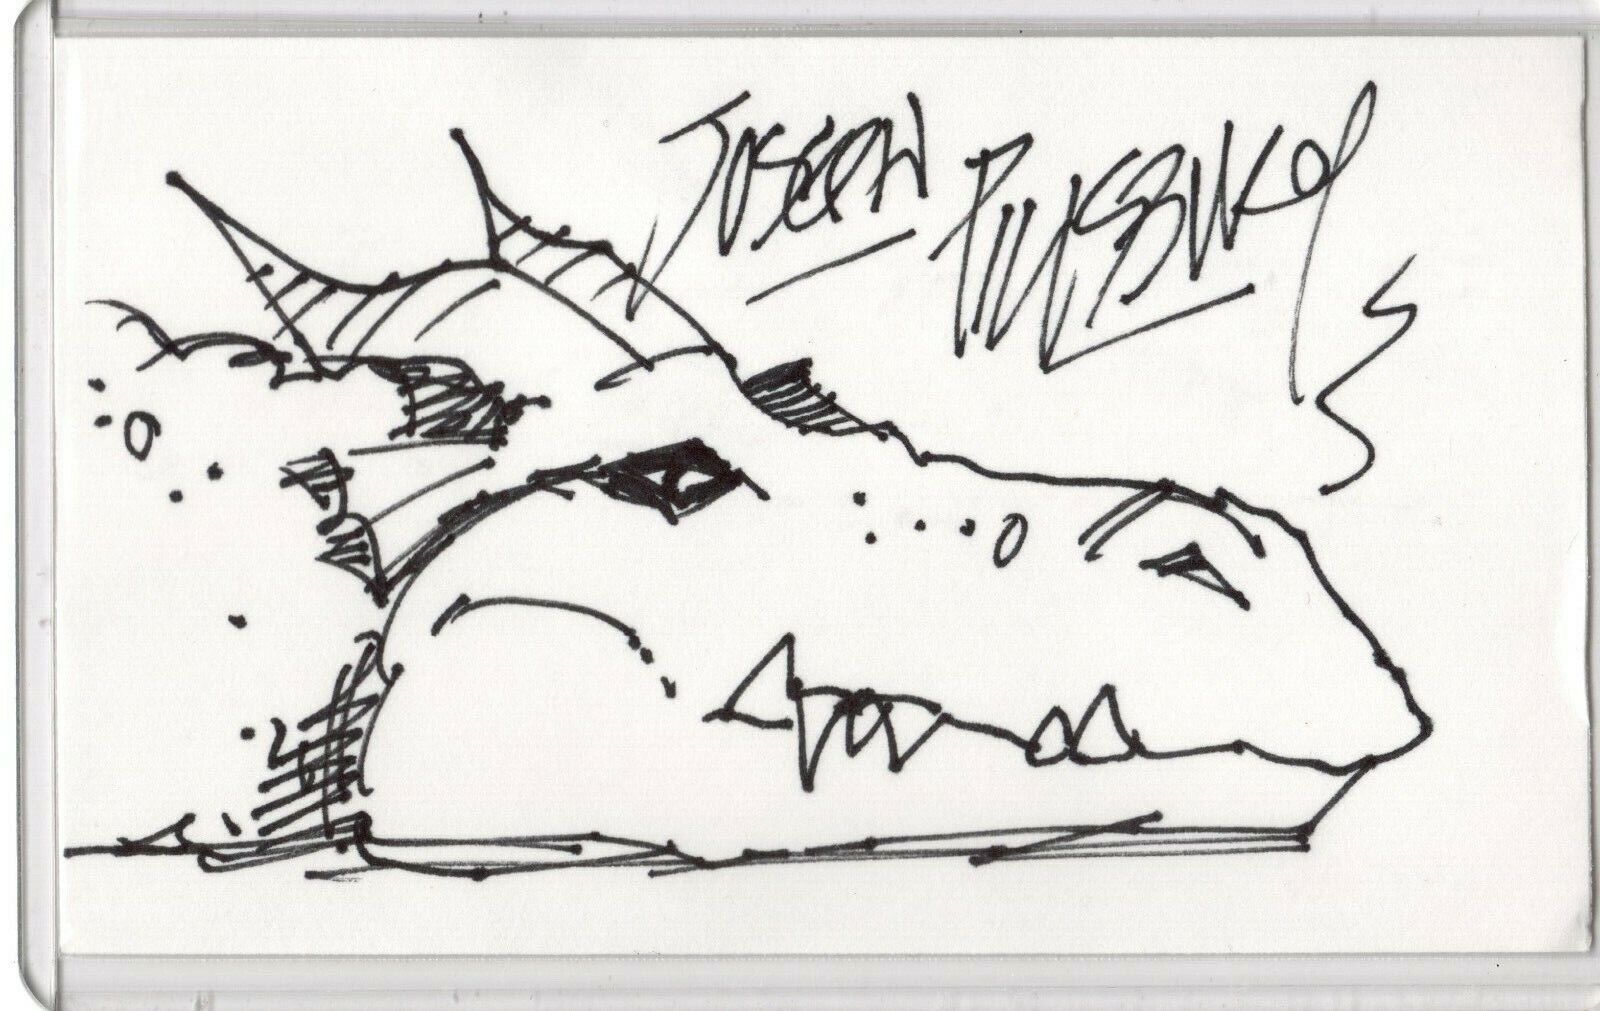 Joseph Pillsbury Dragon Smirks Artist Autograph Signed 3x5 Index Card w/ Sketch